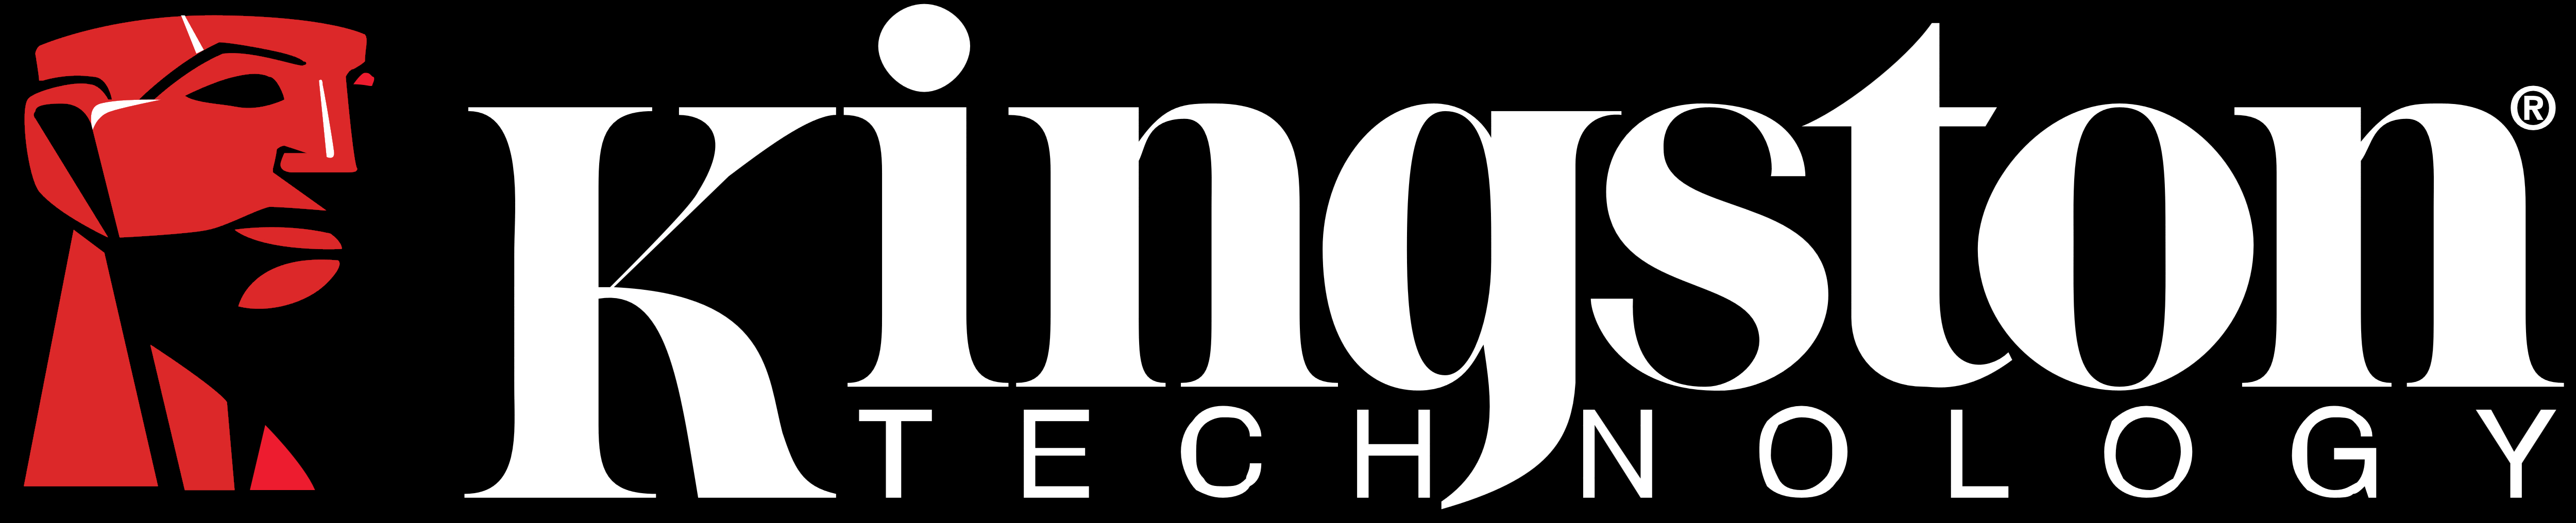 Kingston Logo - Kingston